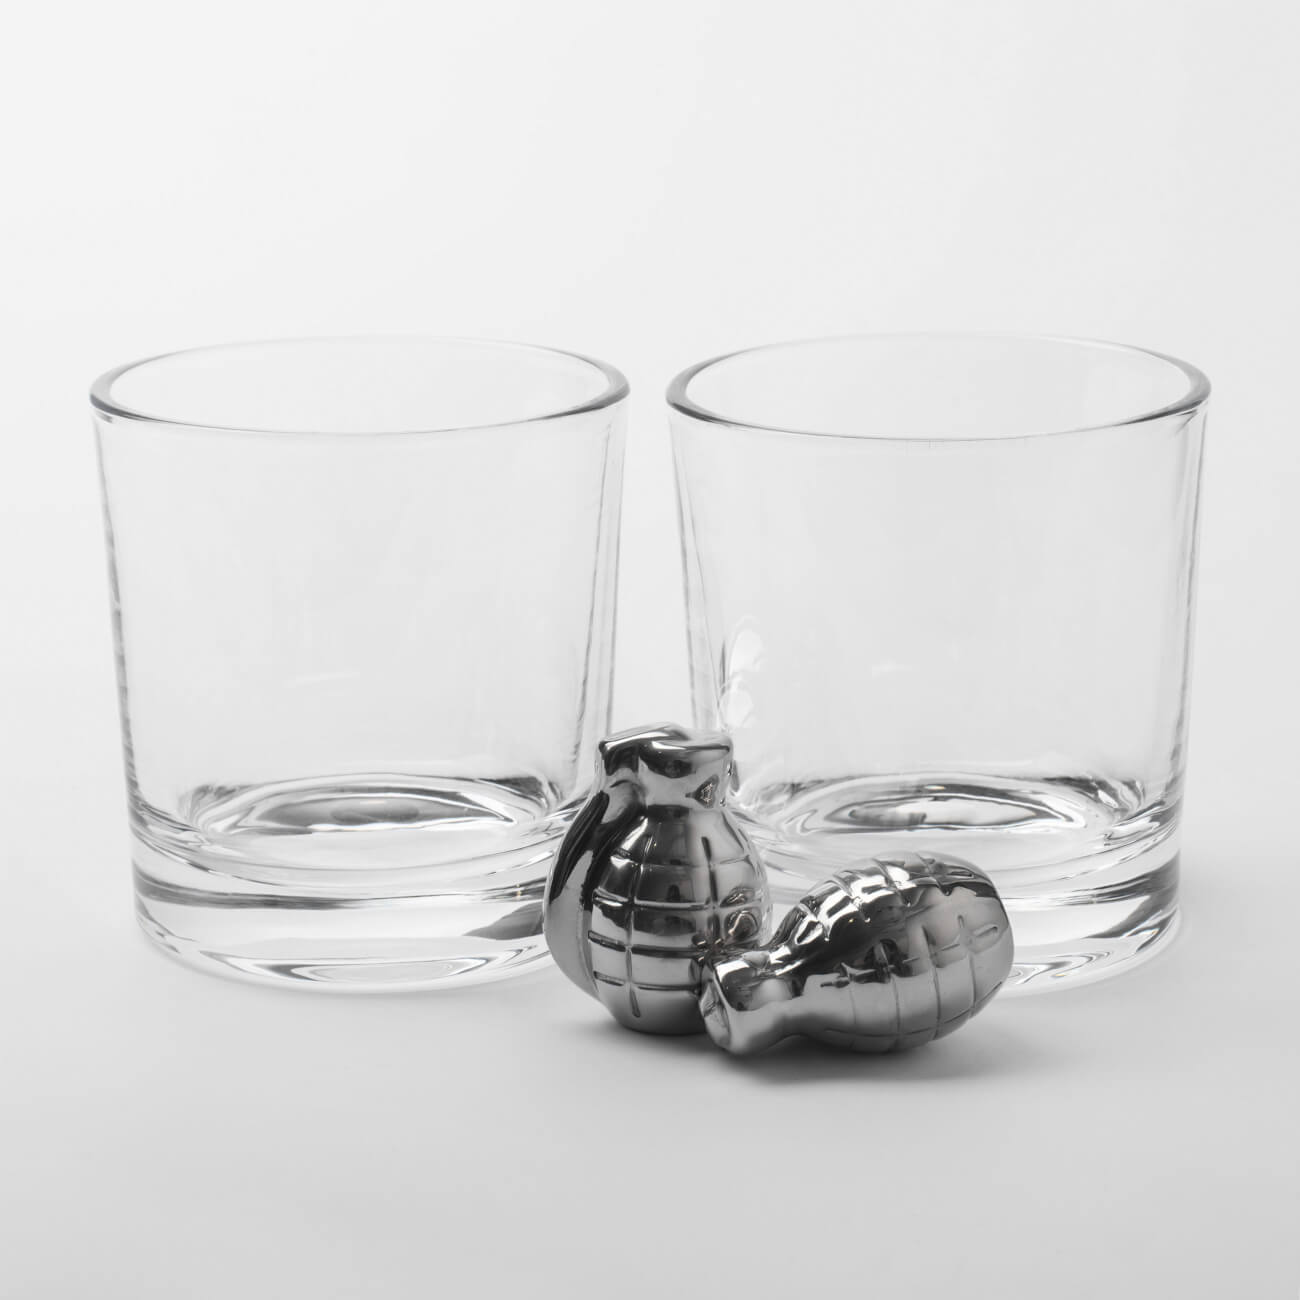 Набор для виски, 2 перс, 4 пр, стаканы/кубики, стекло/сталь, Граната, Bullet набор для виски 1 перс 4 пр стакан кубики стекло р мрамор mosaic